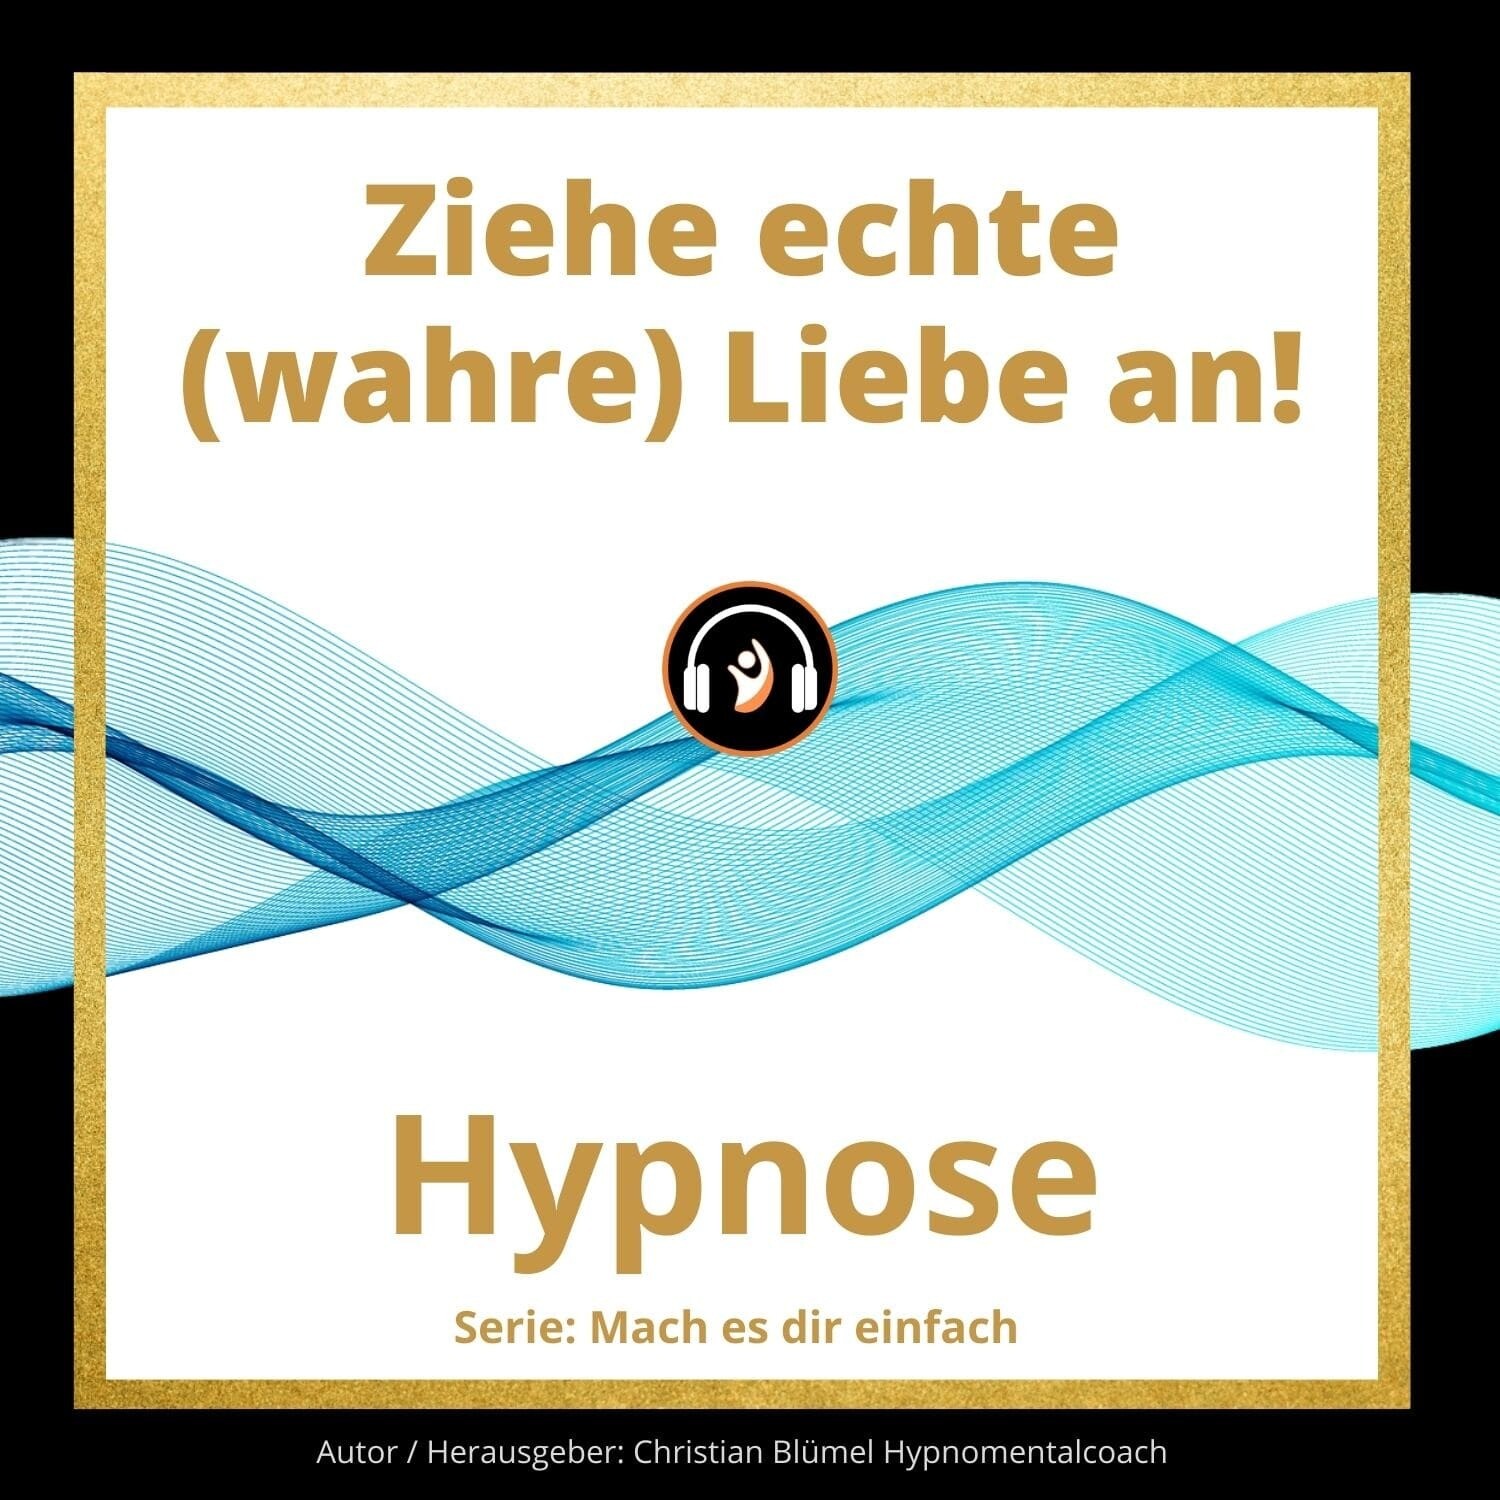 Audio Hypnose: Ziehe echte (wahre) Liebe an!
GPS – gelassen-positiv-selbstbewusst